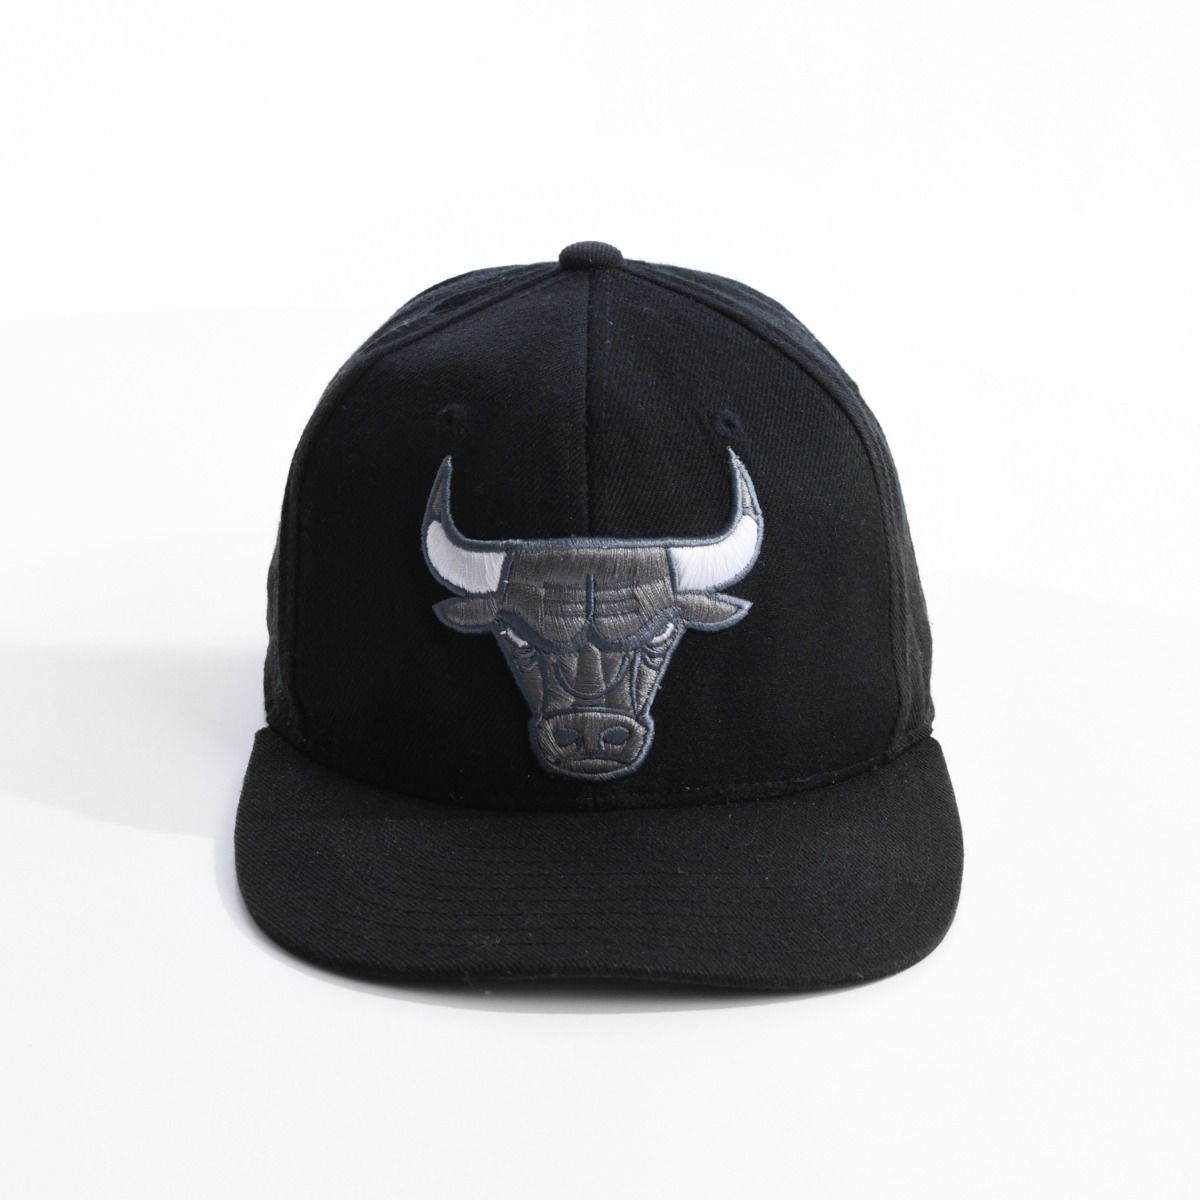 Chicago Bulls Adidas Hat